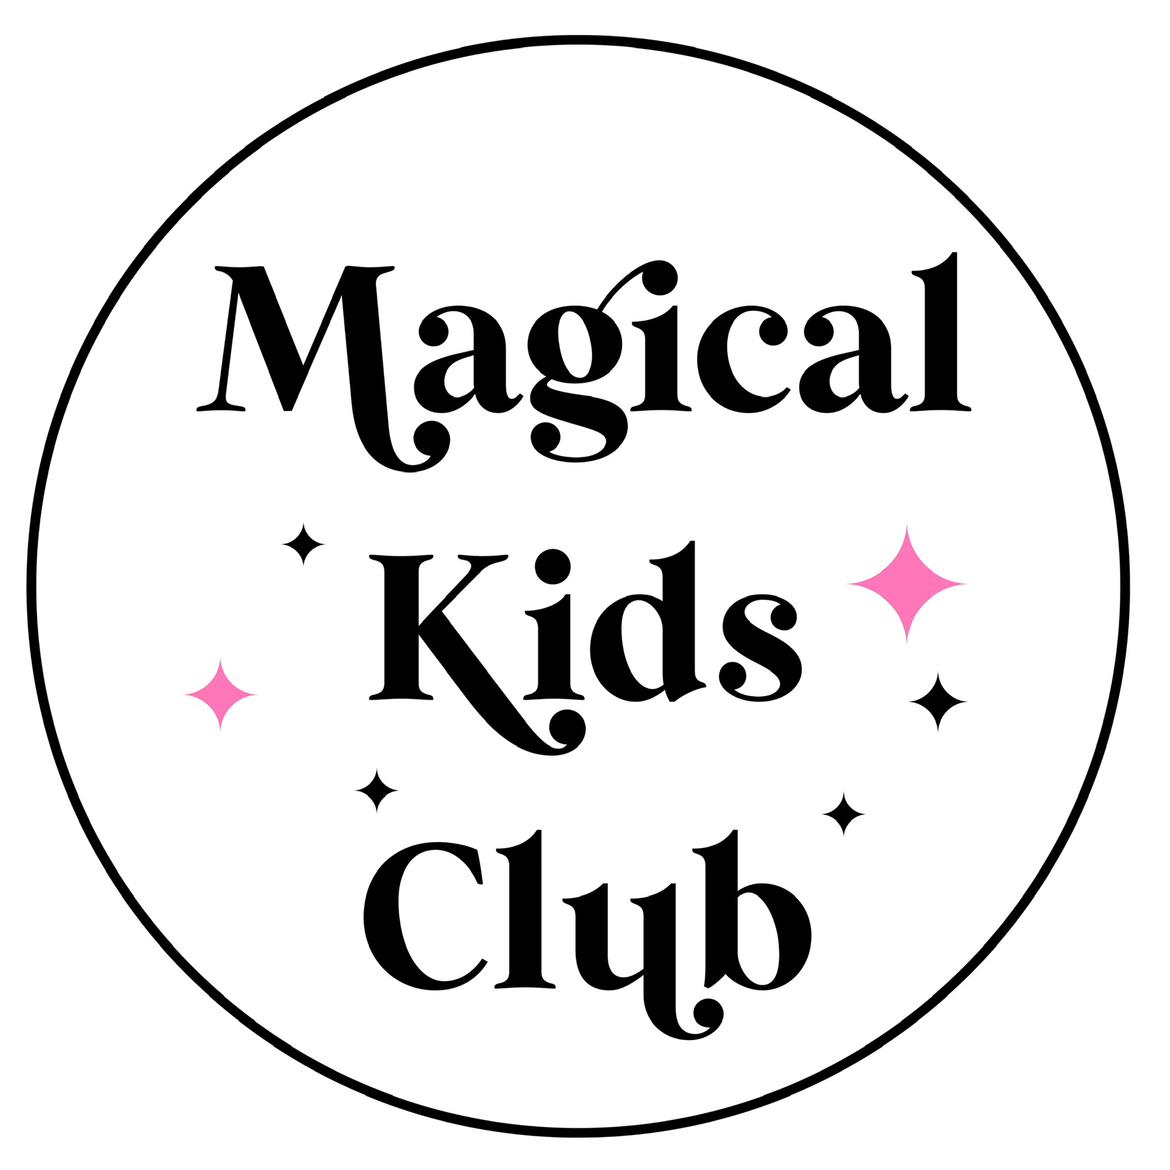 MagicalKidsClub's images